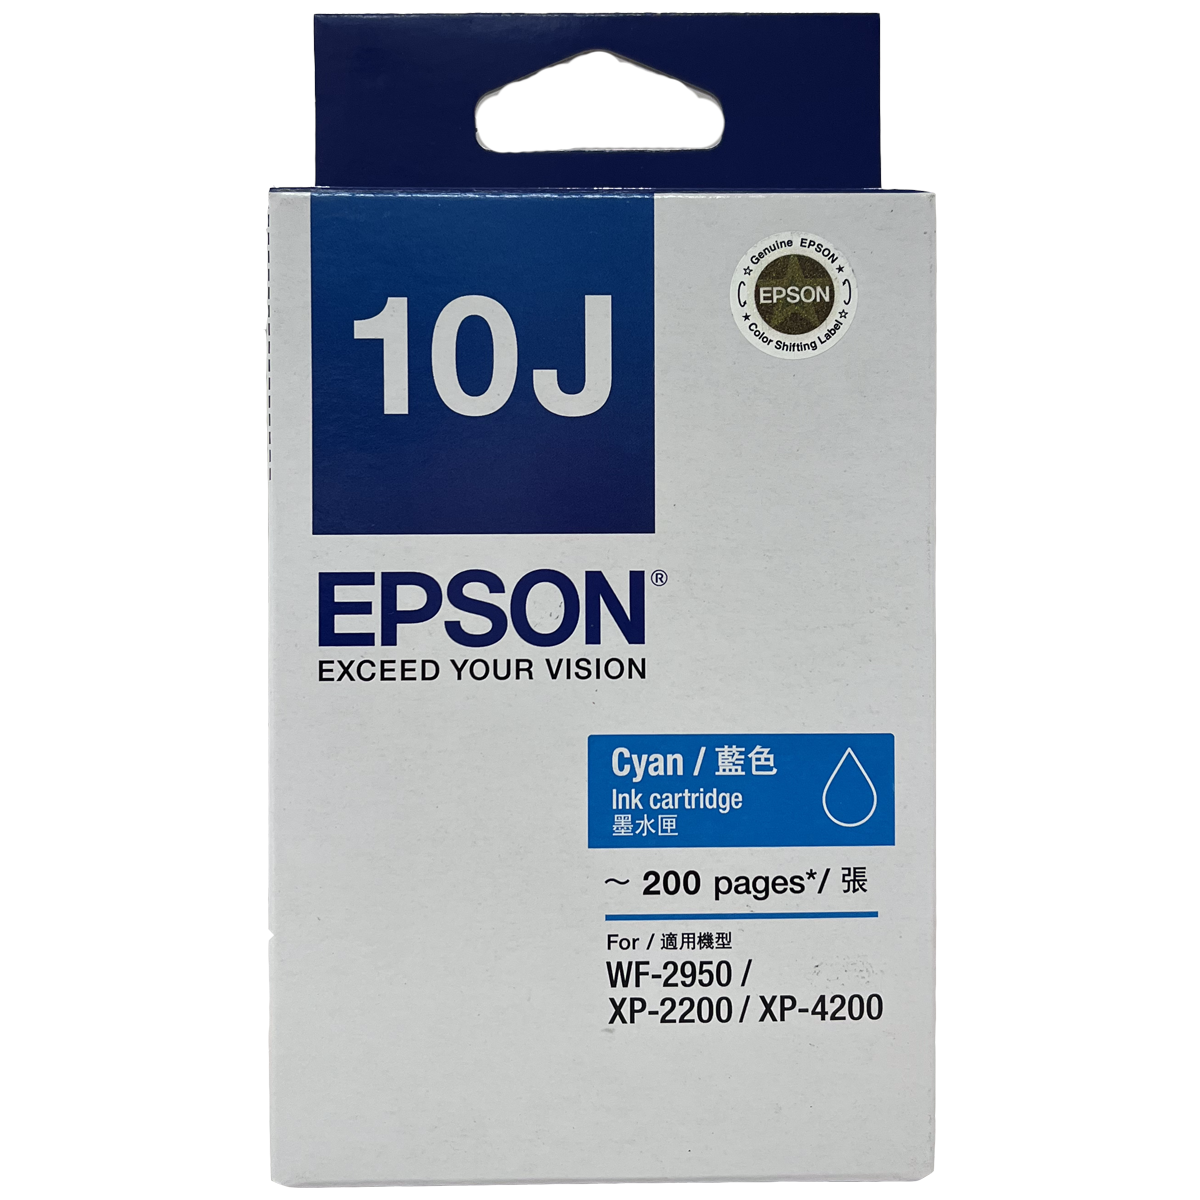 Epson 10J Cyan Ink Cartridge #C13T10J283